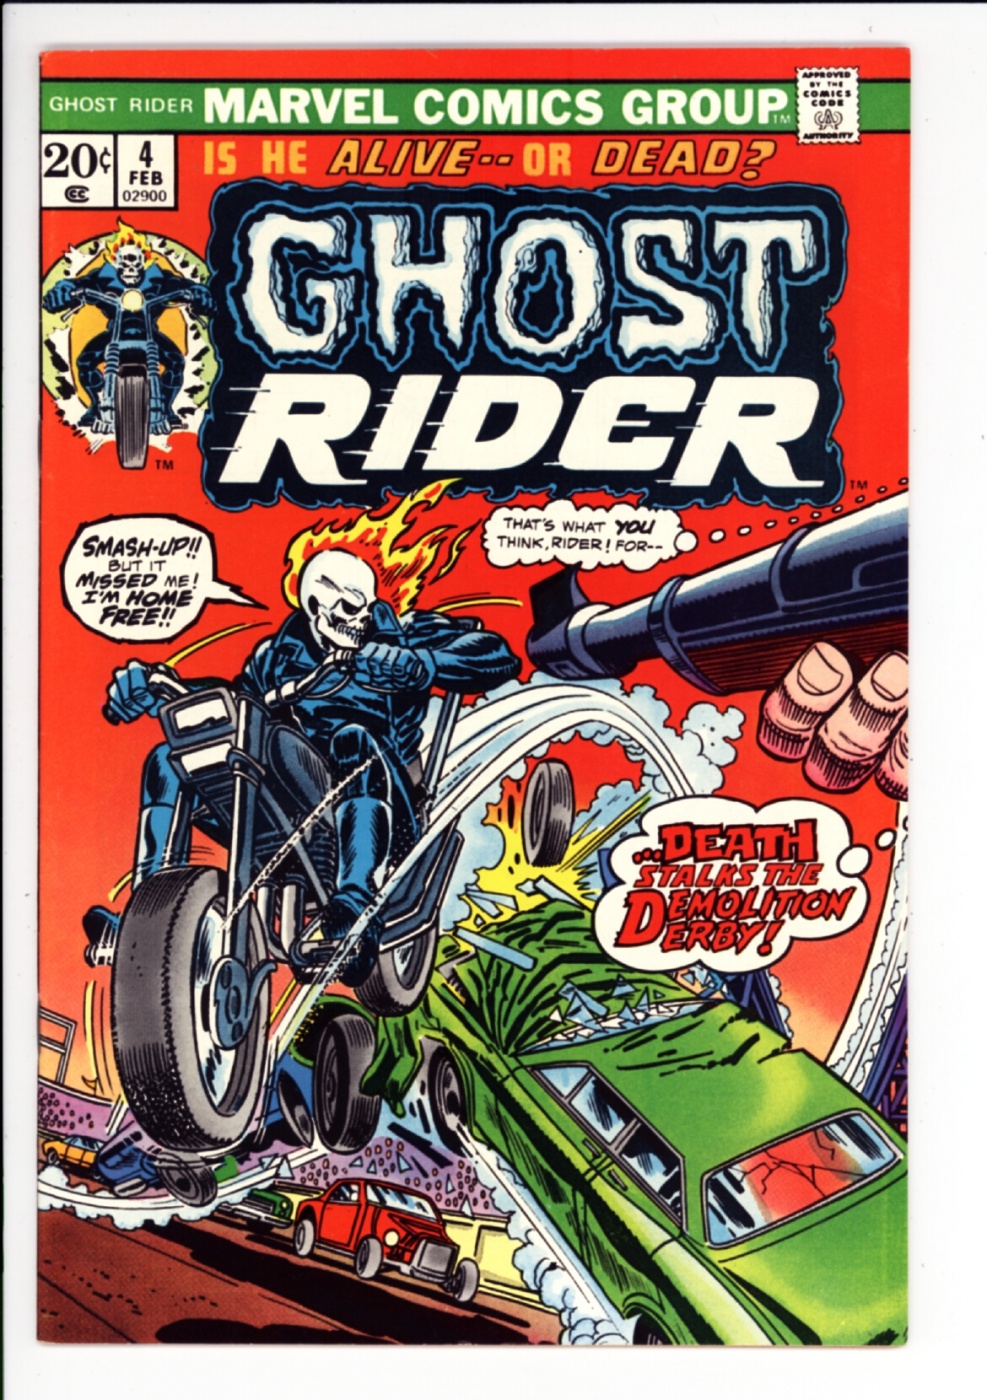 2006 Ghost Rider #4 